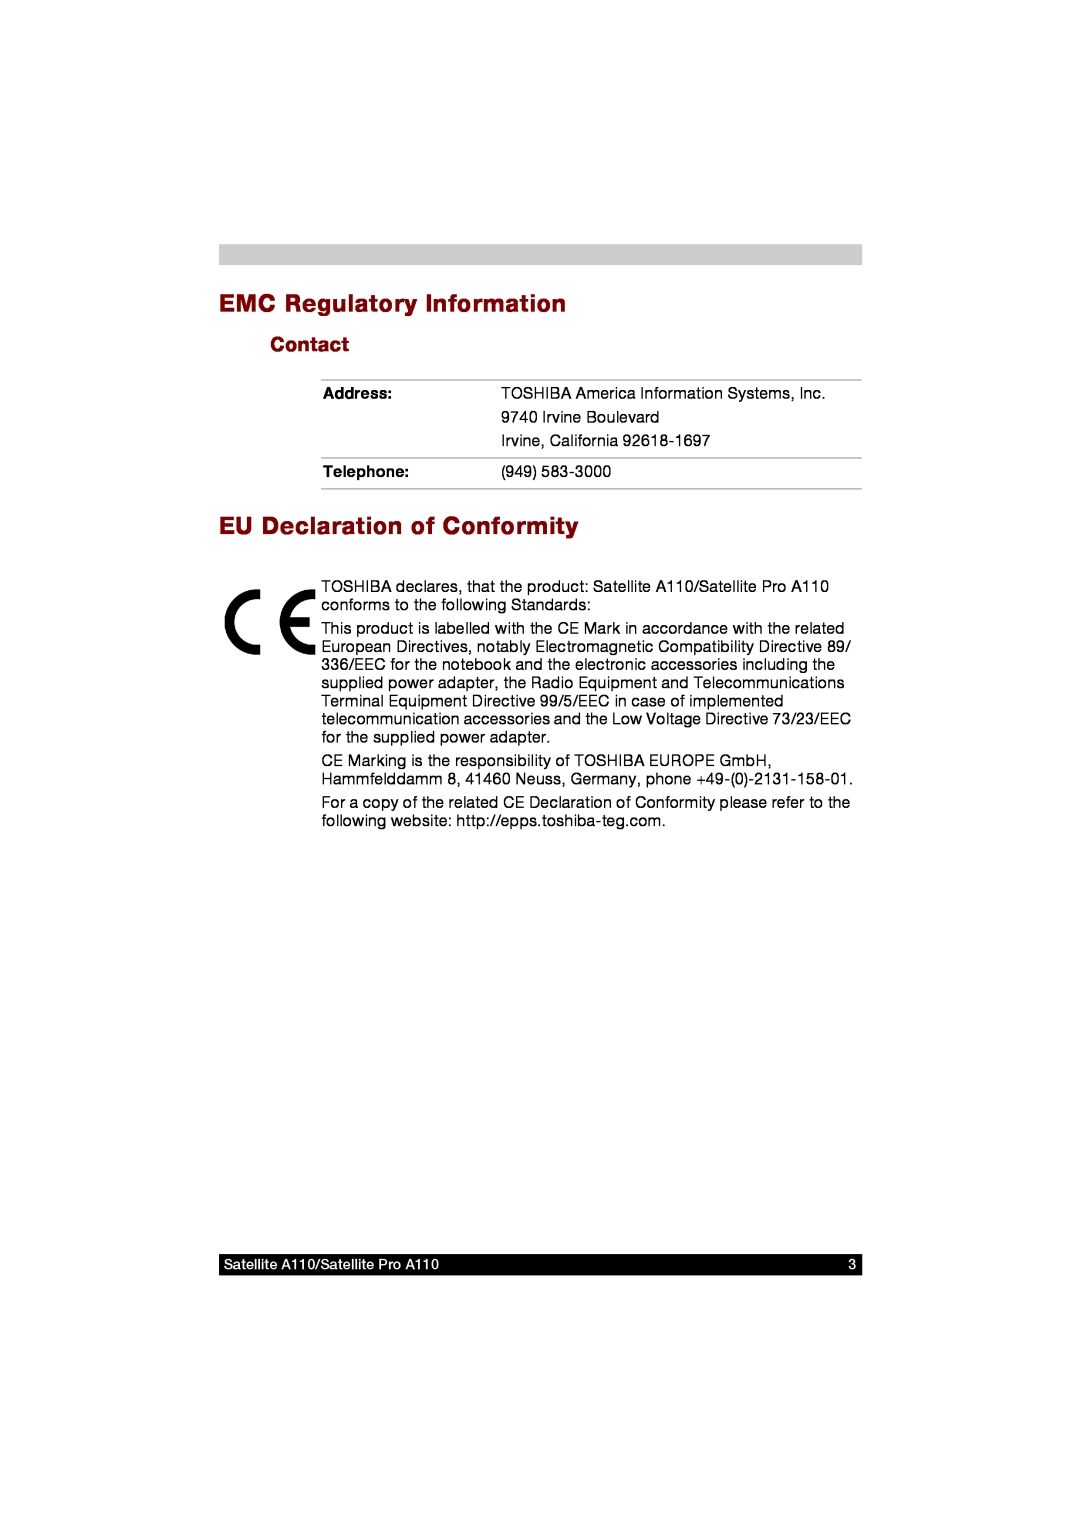 Toshiba A110 user manual EMC Regulatory Information, EU Declaration of Conformity, Contact 